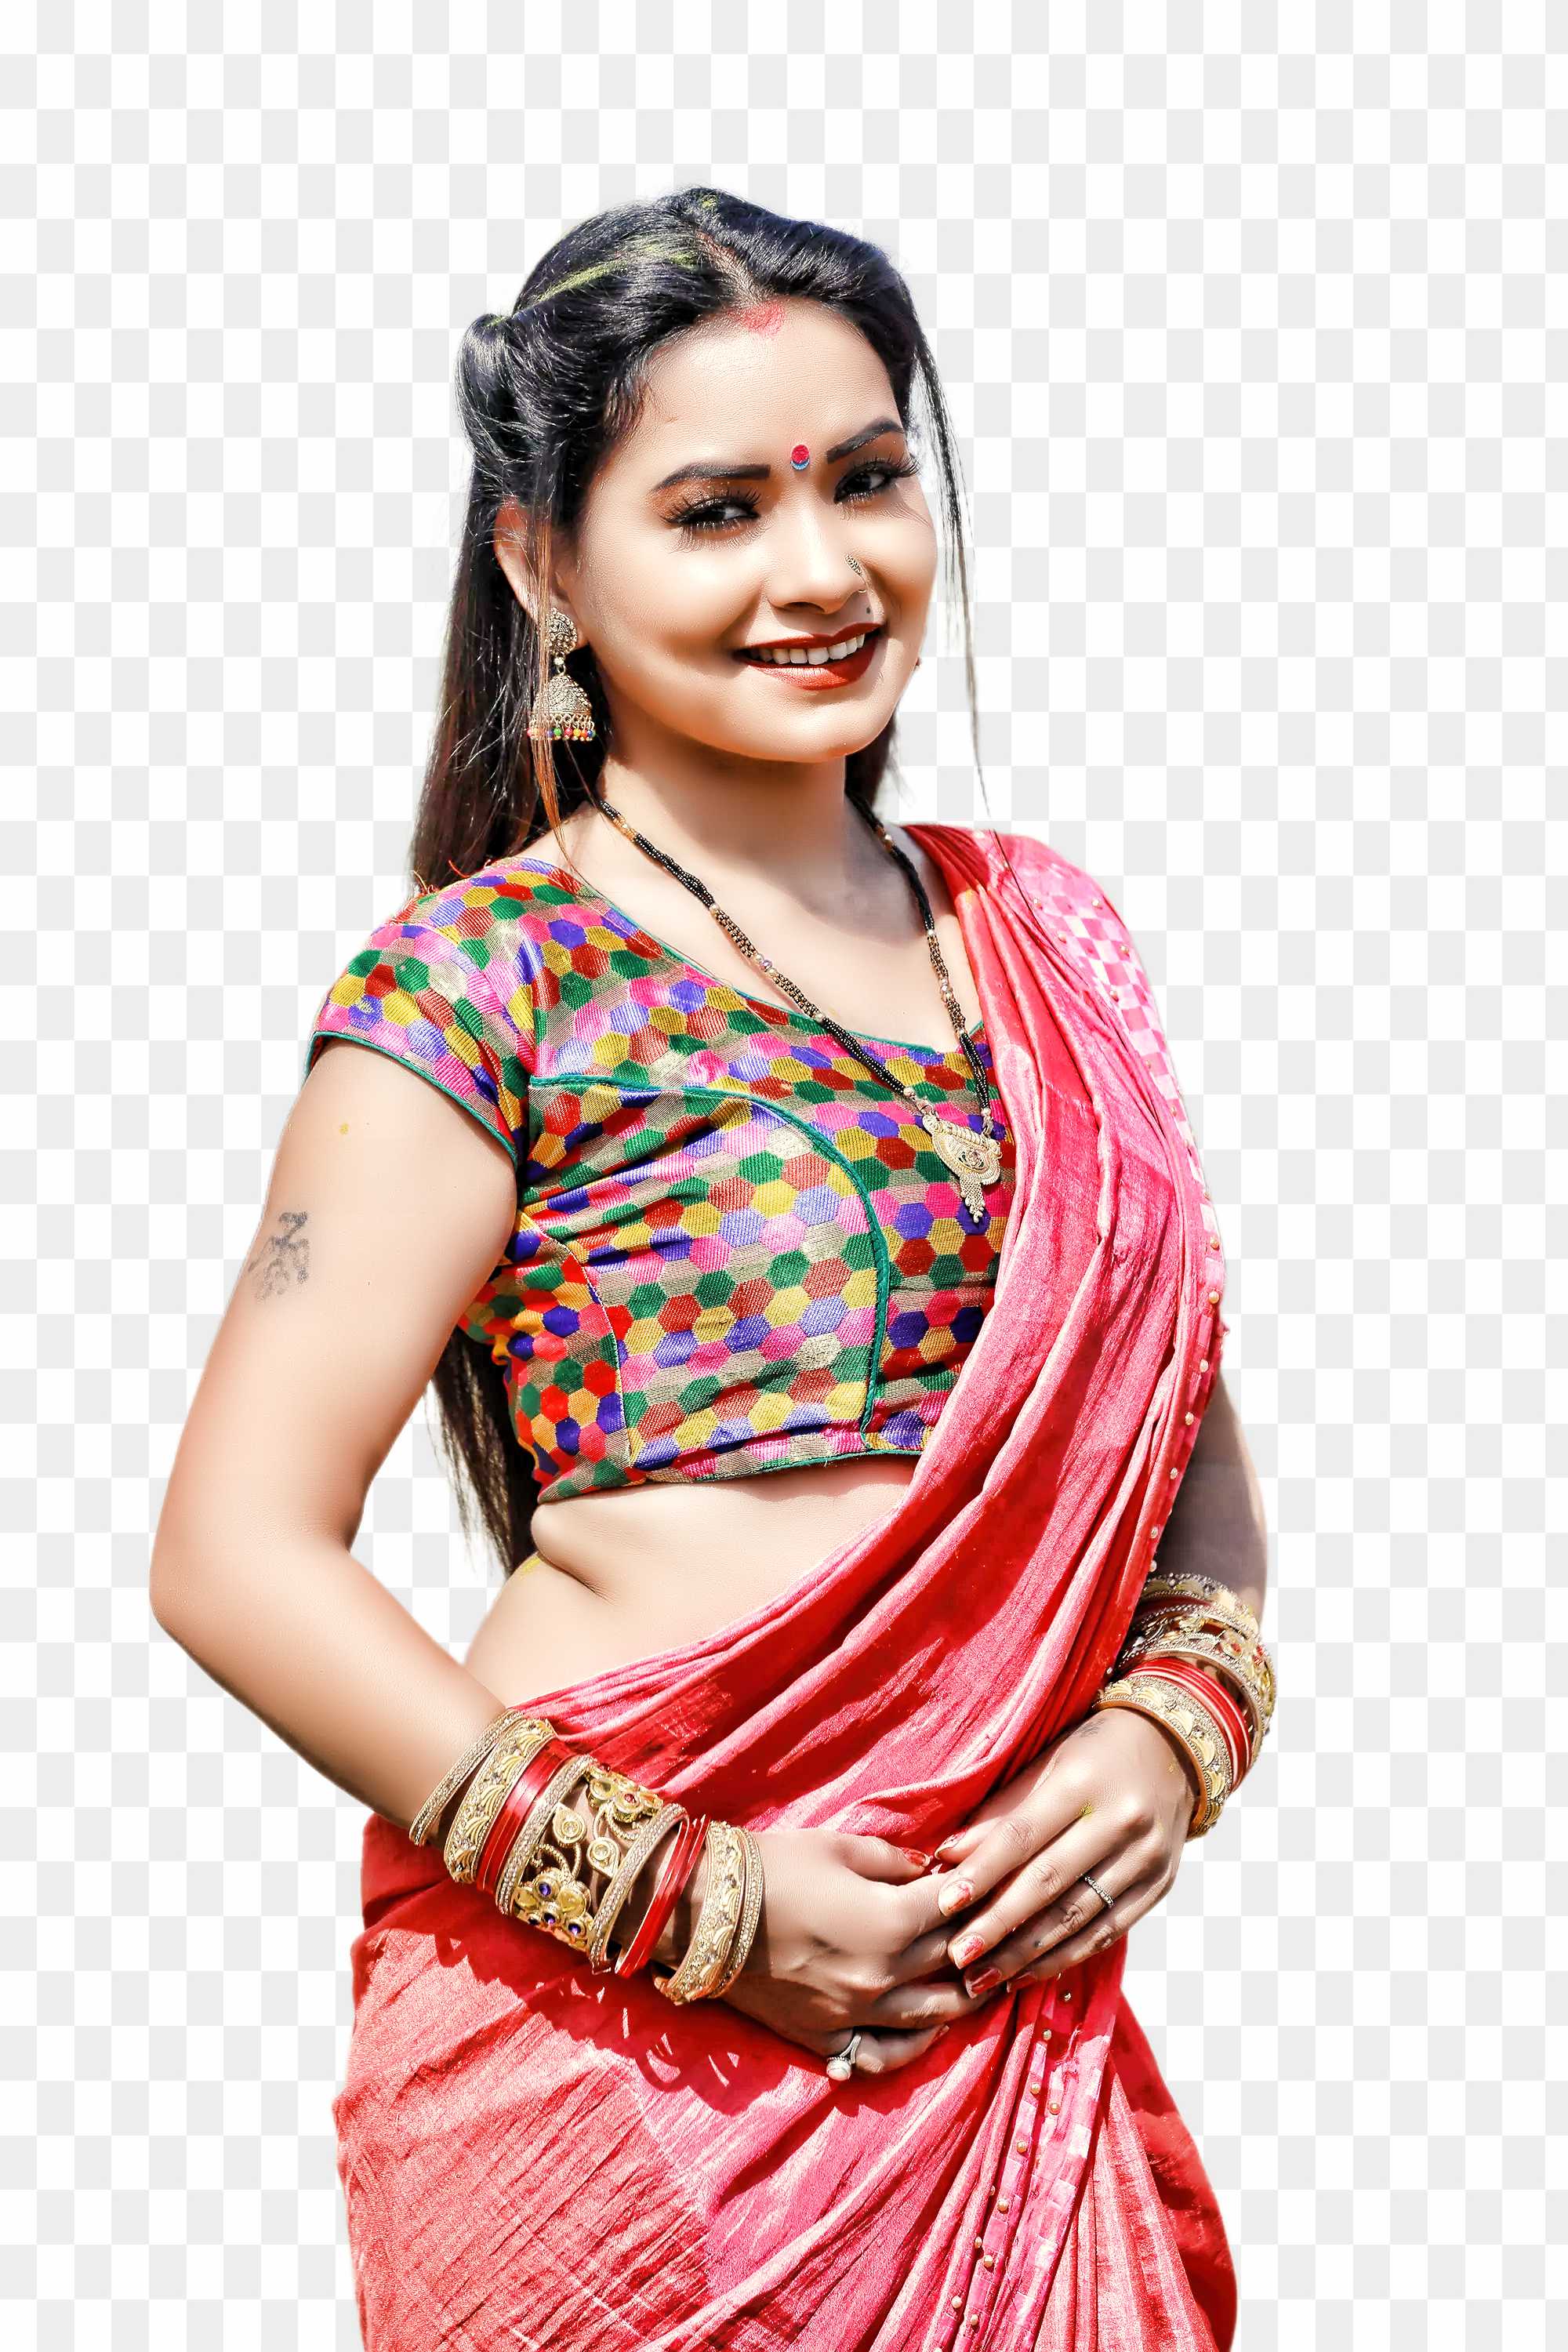 Indian girl full HD PNG transparent image Download